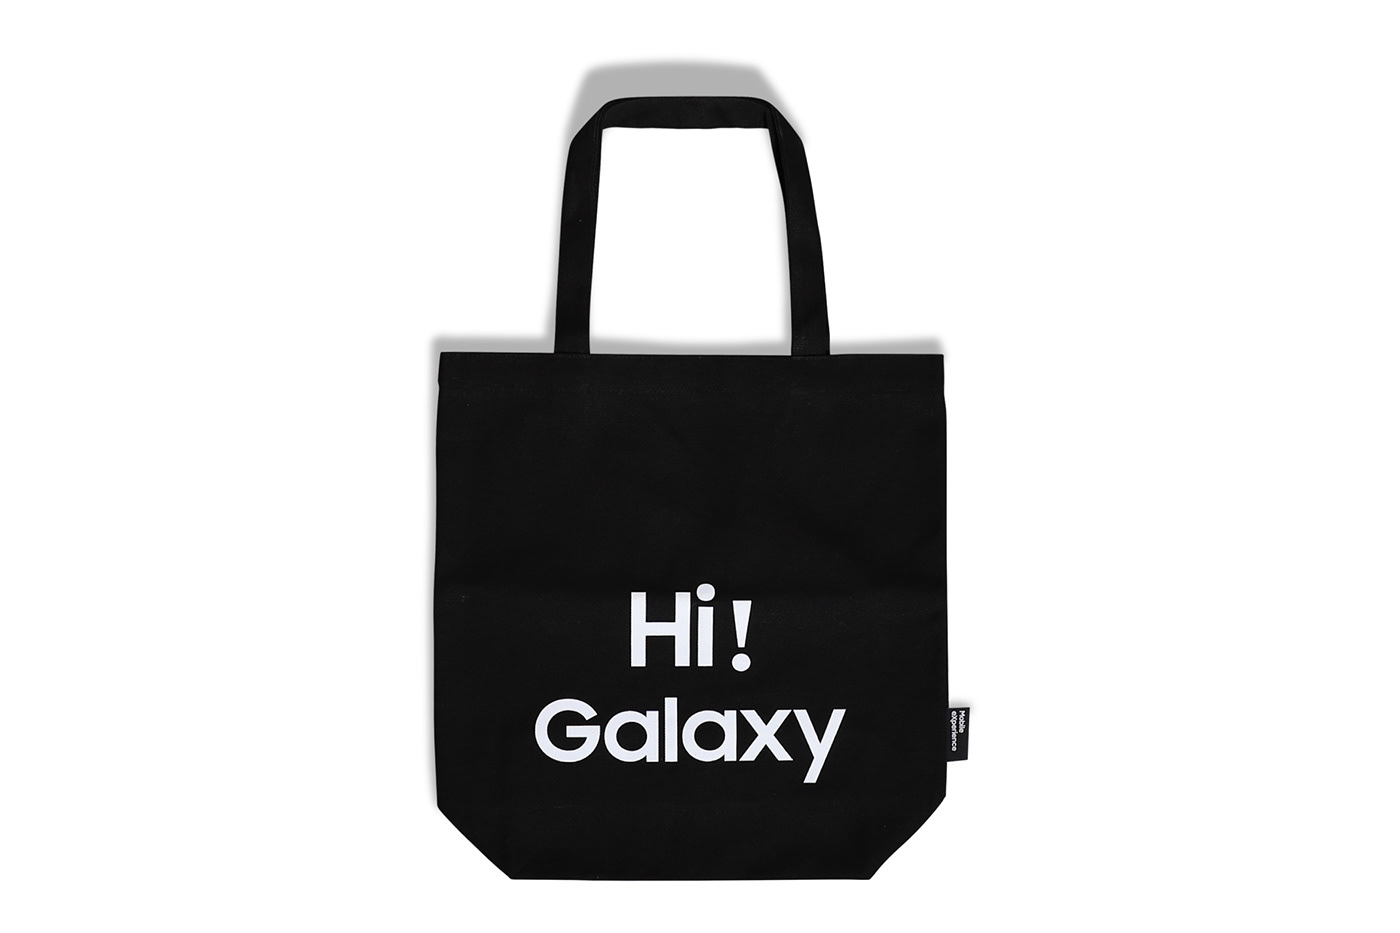 Samsung samsung galaxy Samsung Mobile welcome kit Onboarding kit HR brand identity marketing   goods Internal Communication